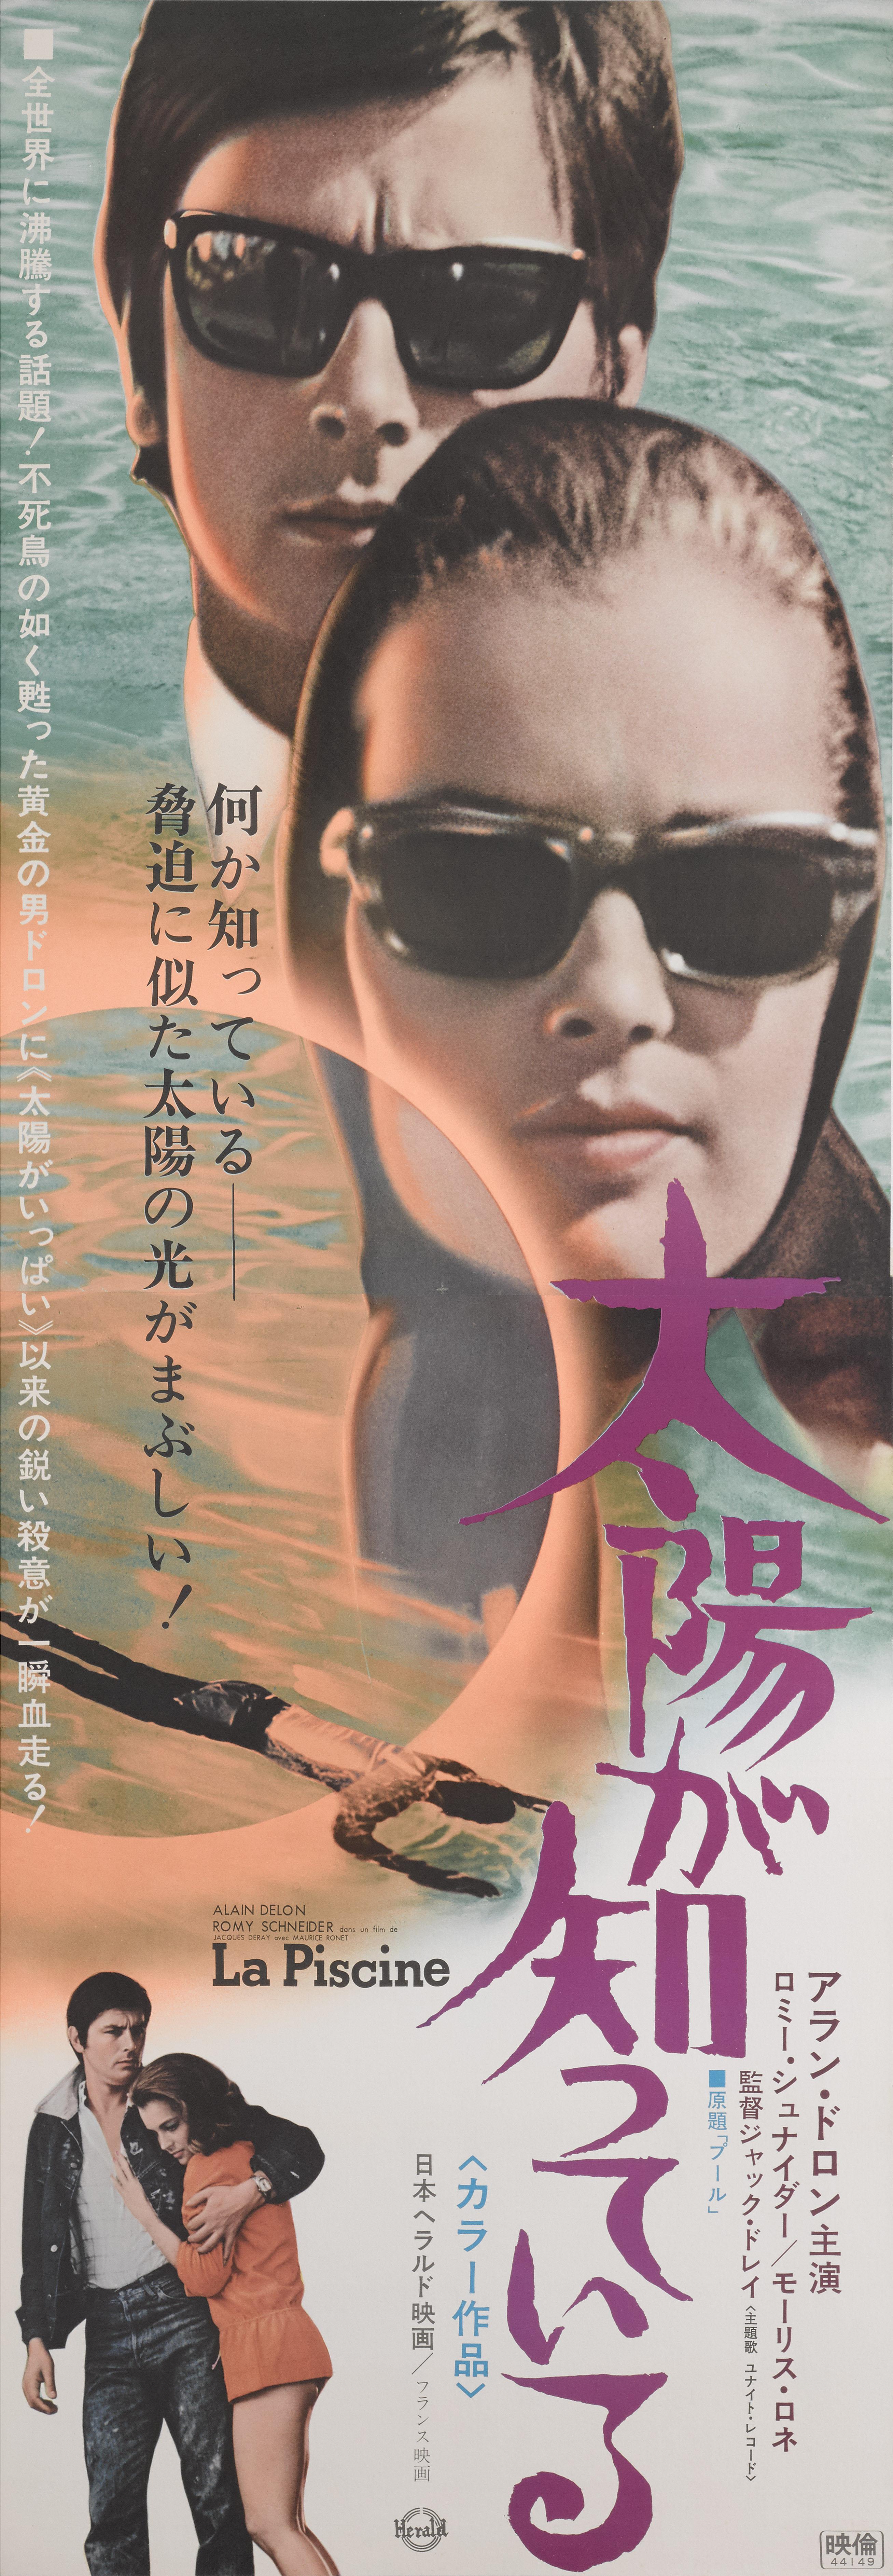 la piscine movie poster